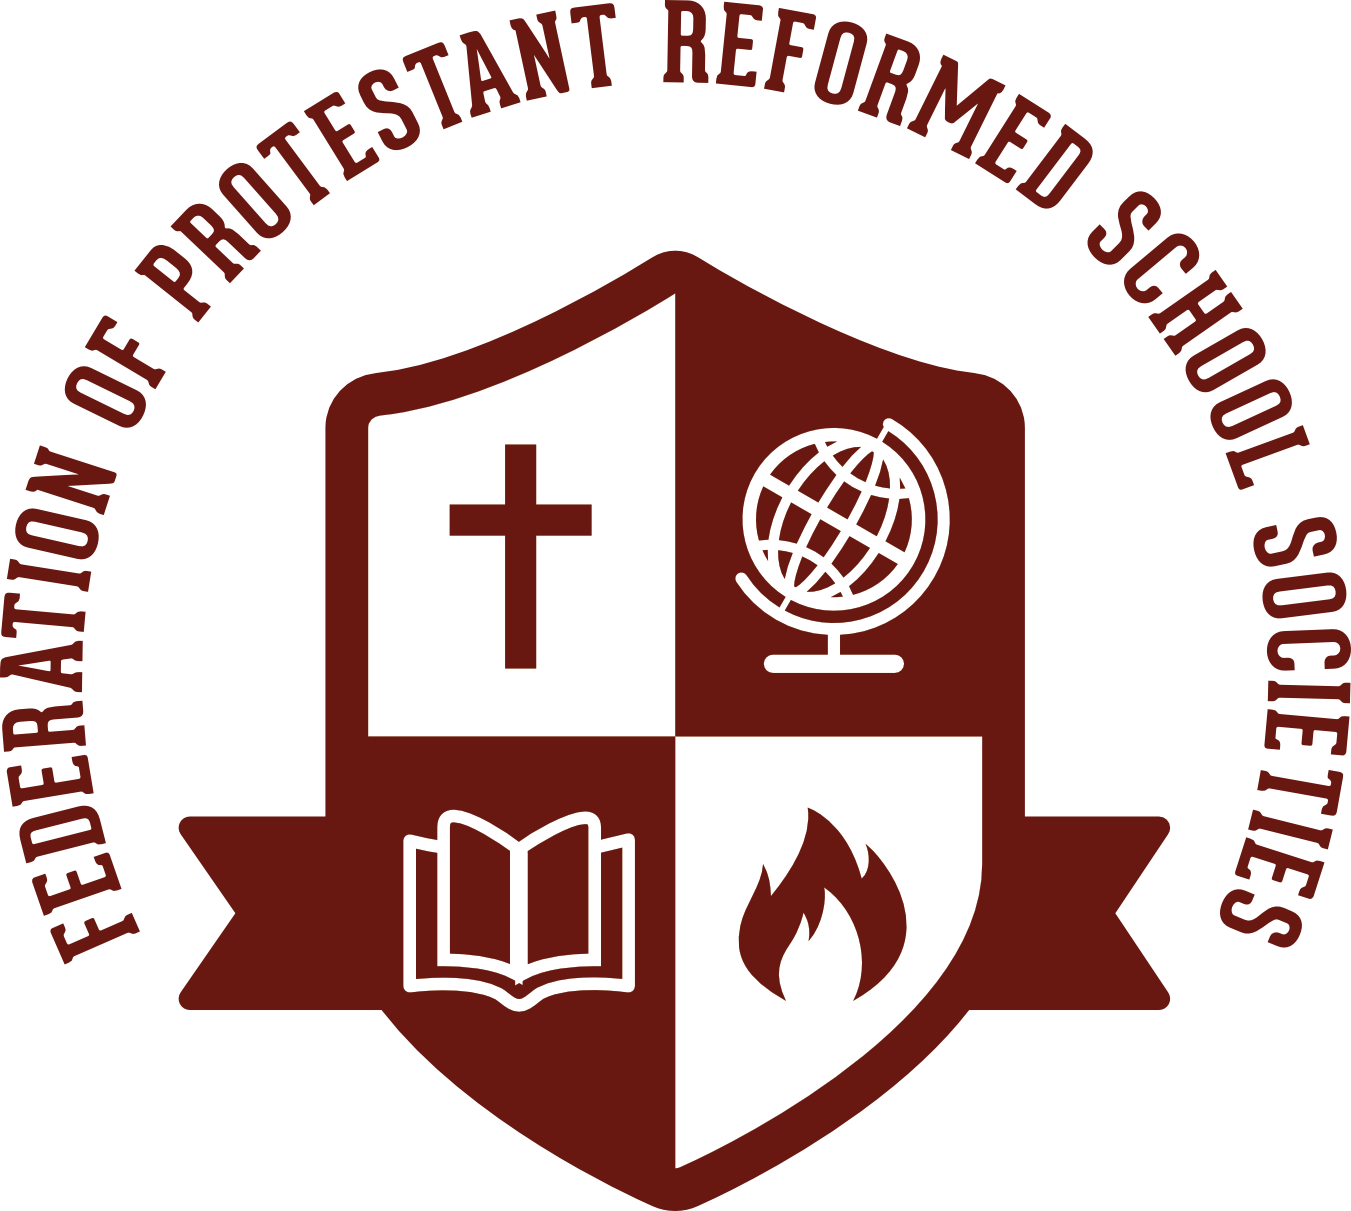 Federation of Protestant Reformed School Societies